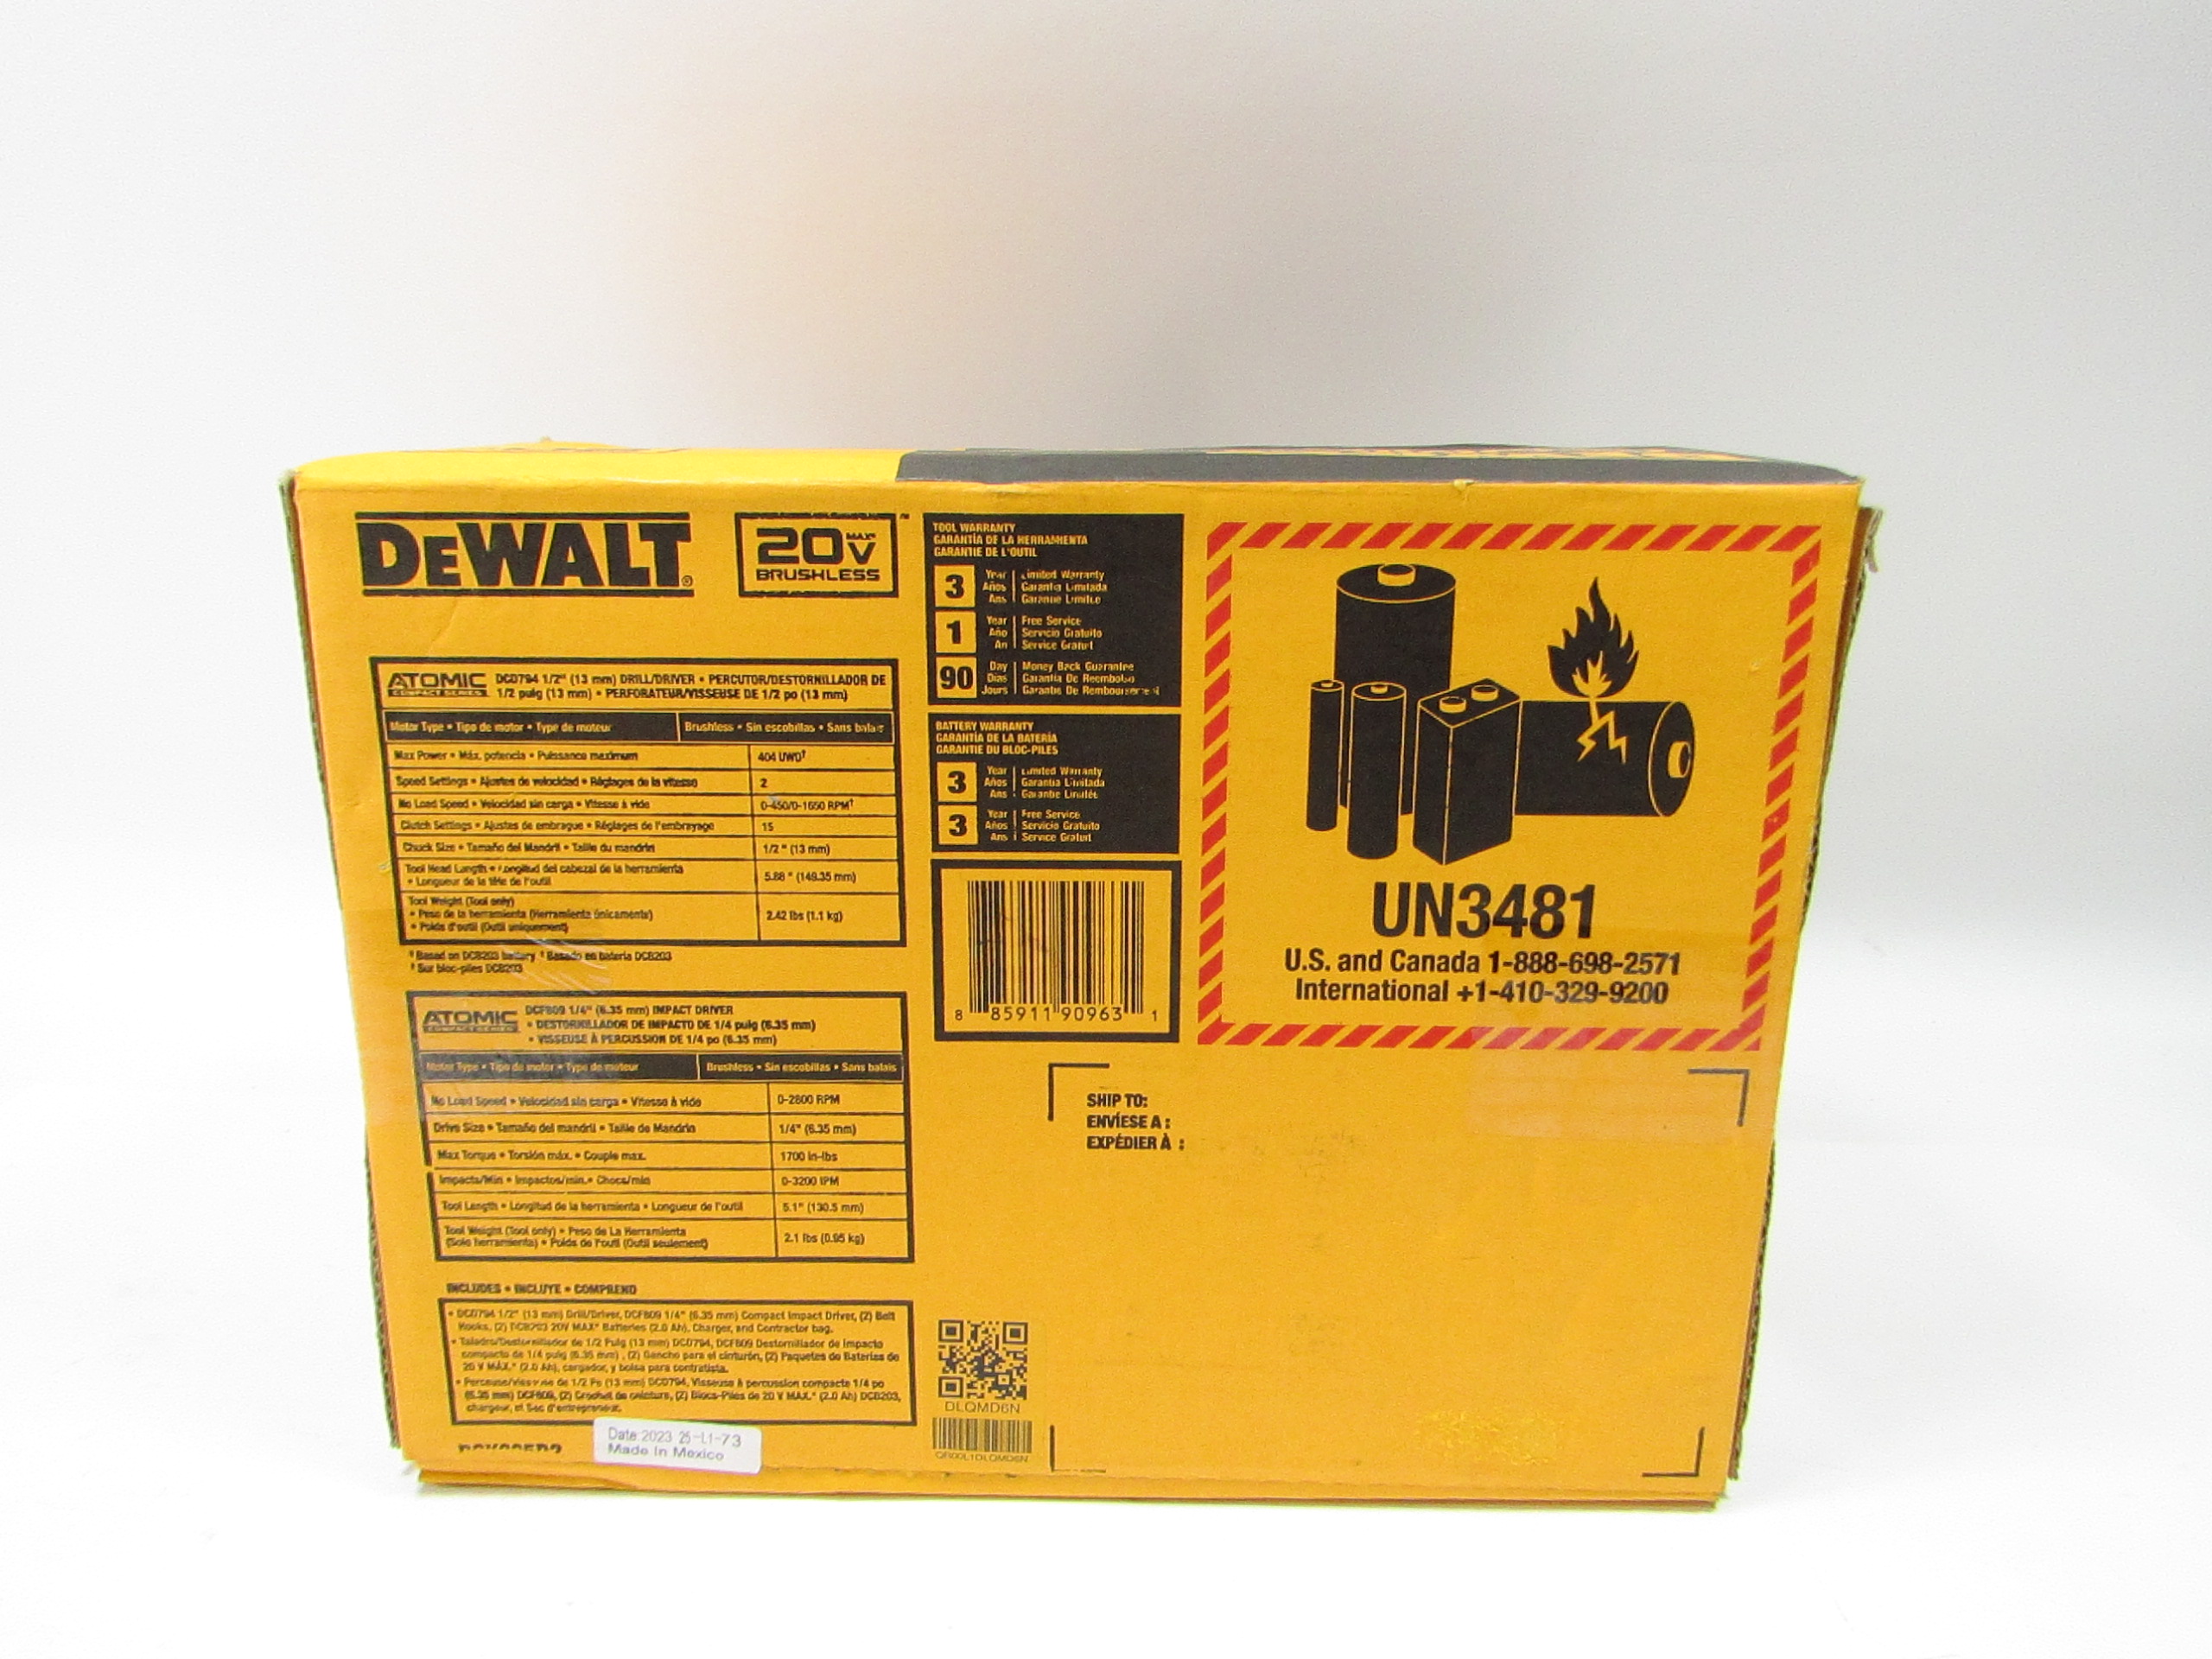 DeWalt DCK225D2 Atomic 20V Max Brushless 2 Tool Combo Kit